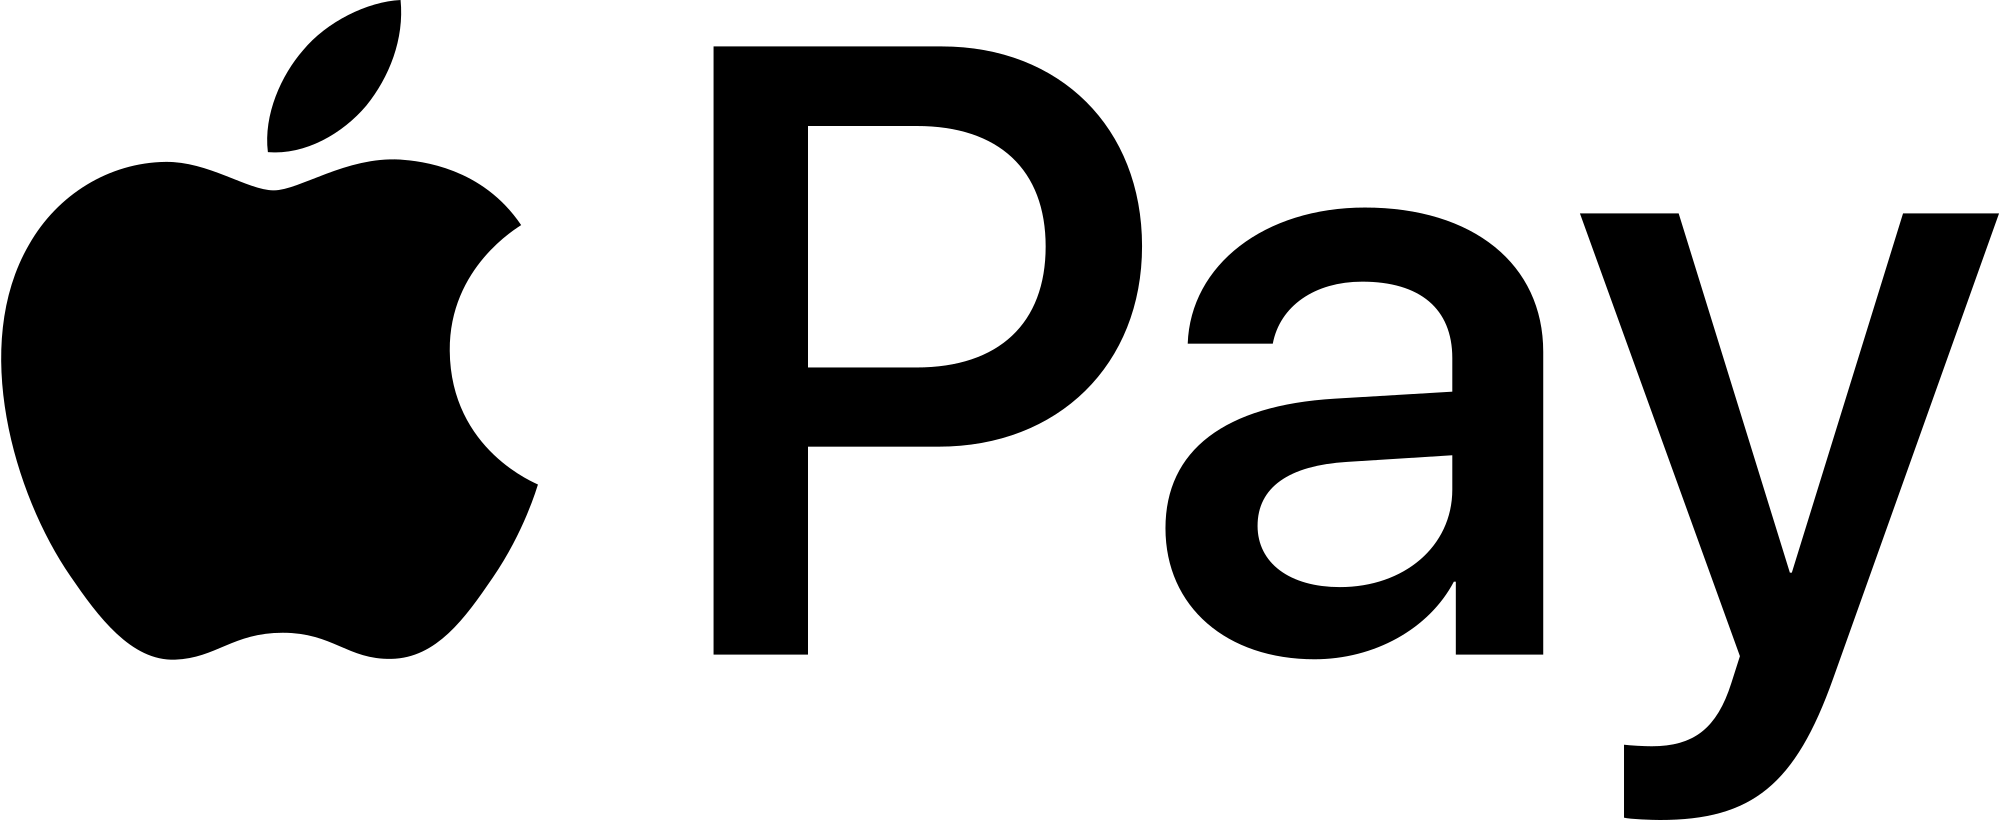 Apple Pay Logo - Apple Pay logo.svg